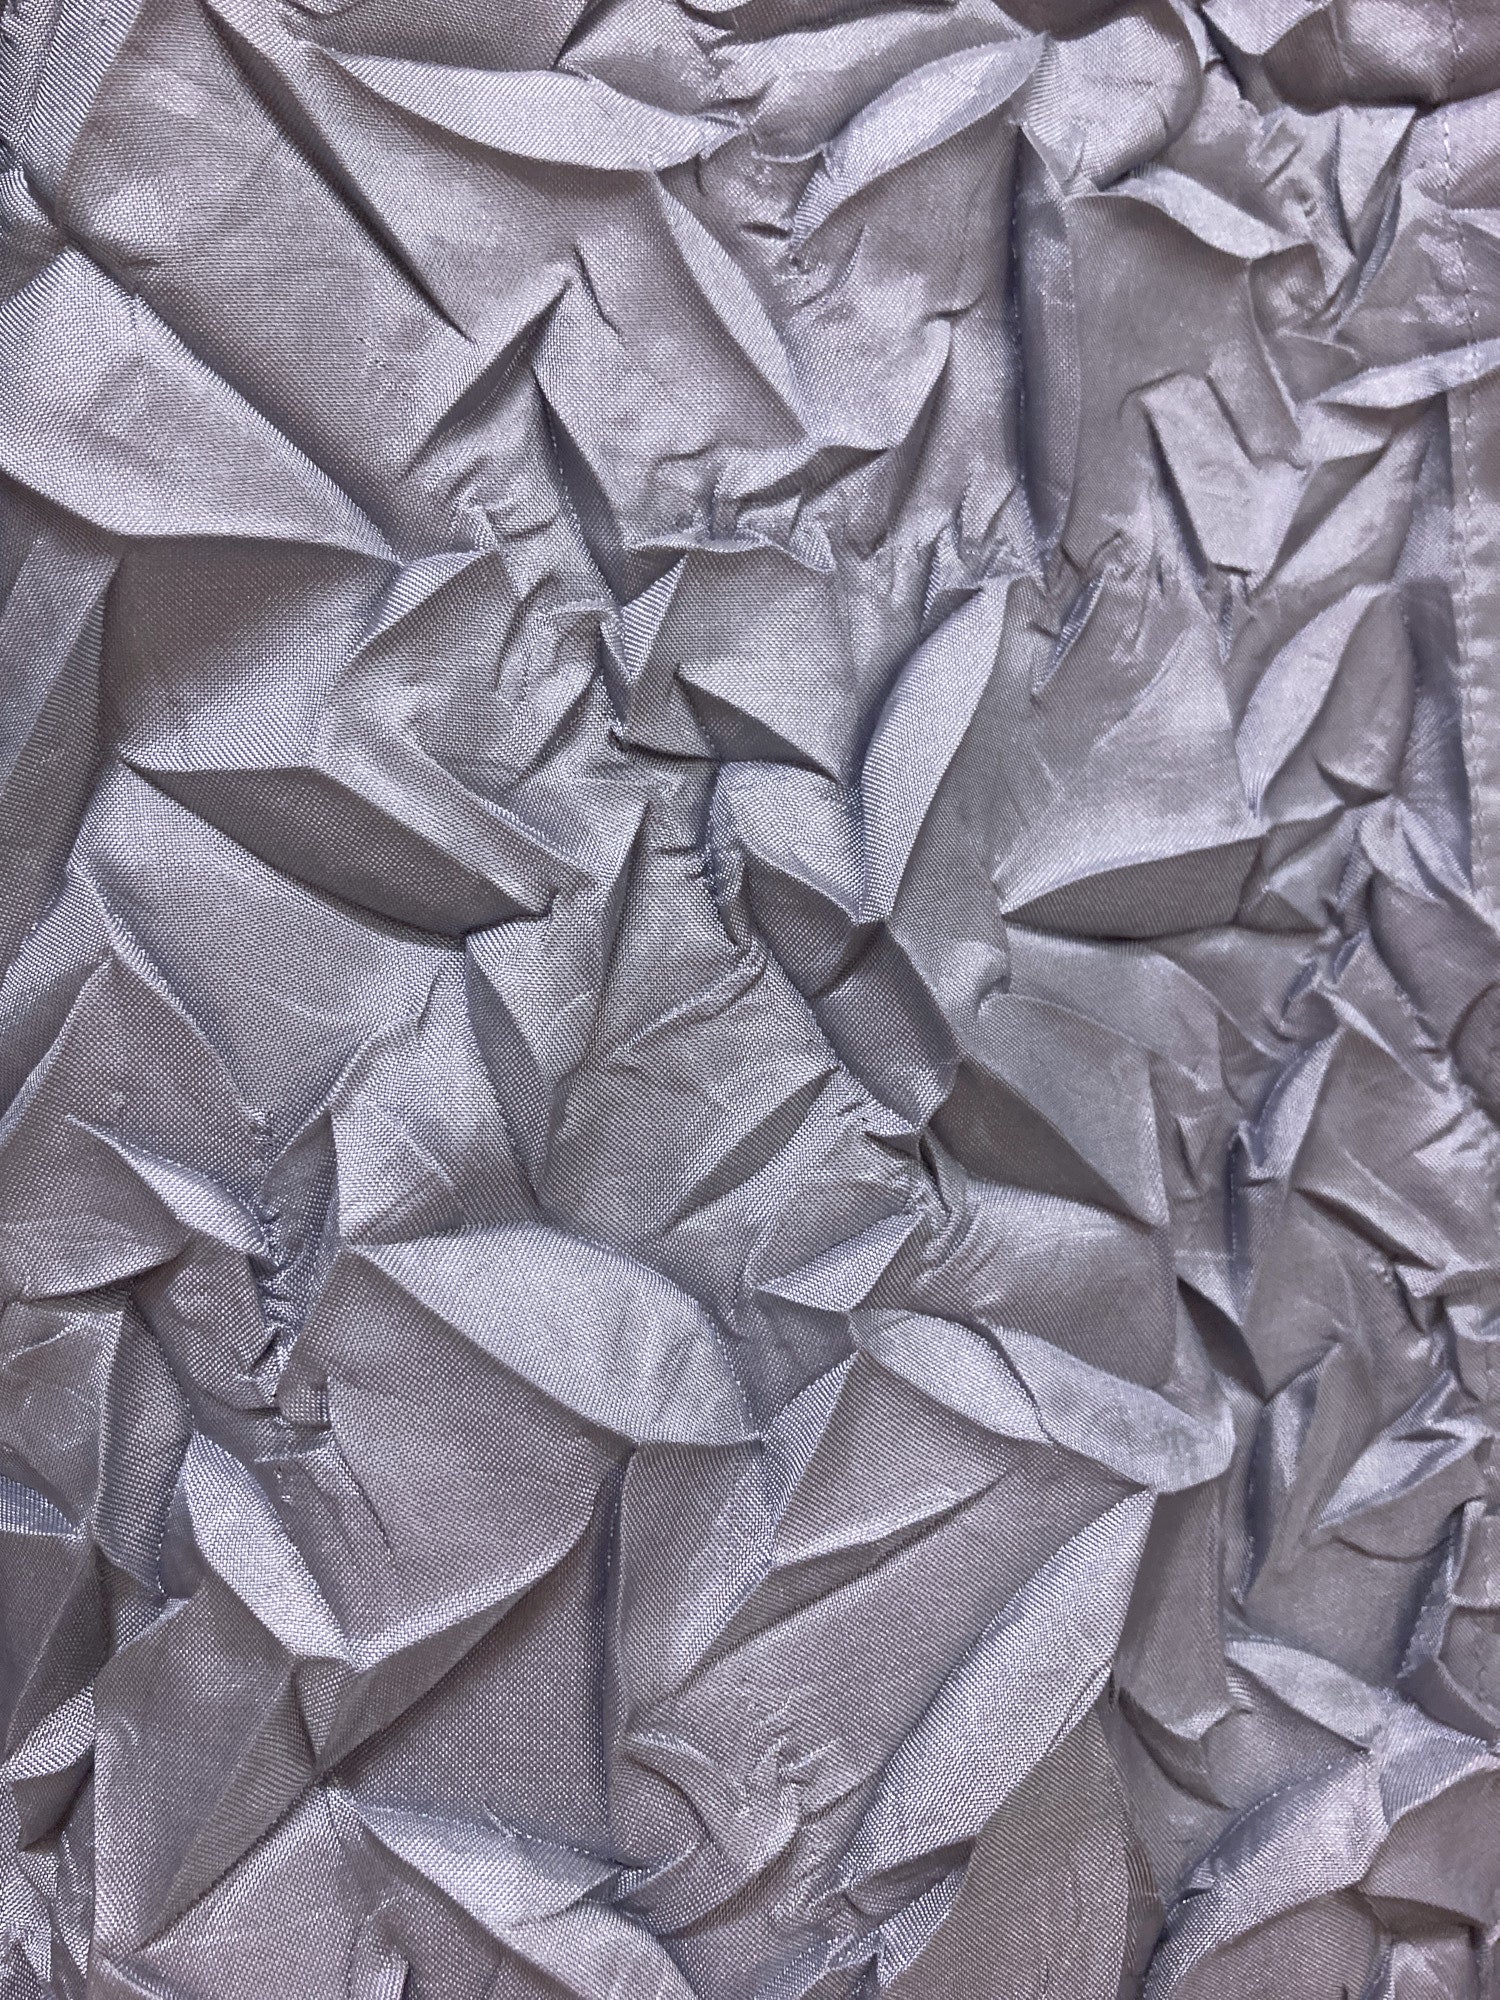 Yoshiki Hishinuma Peplum silver grey creased polyester shirt - size 2 M